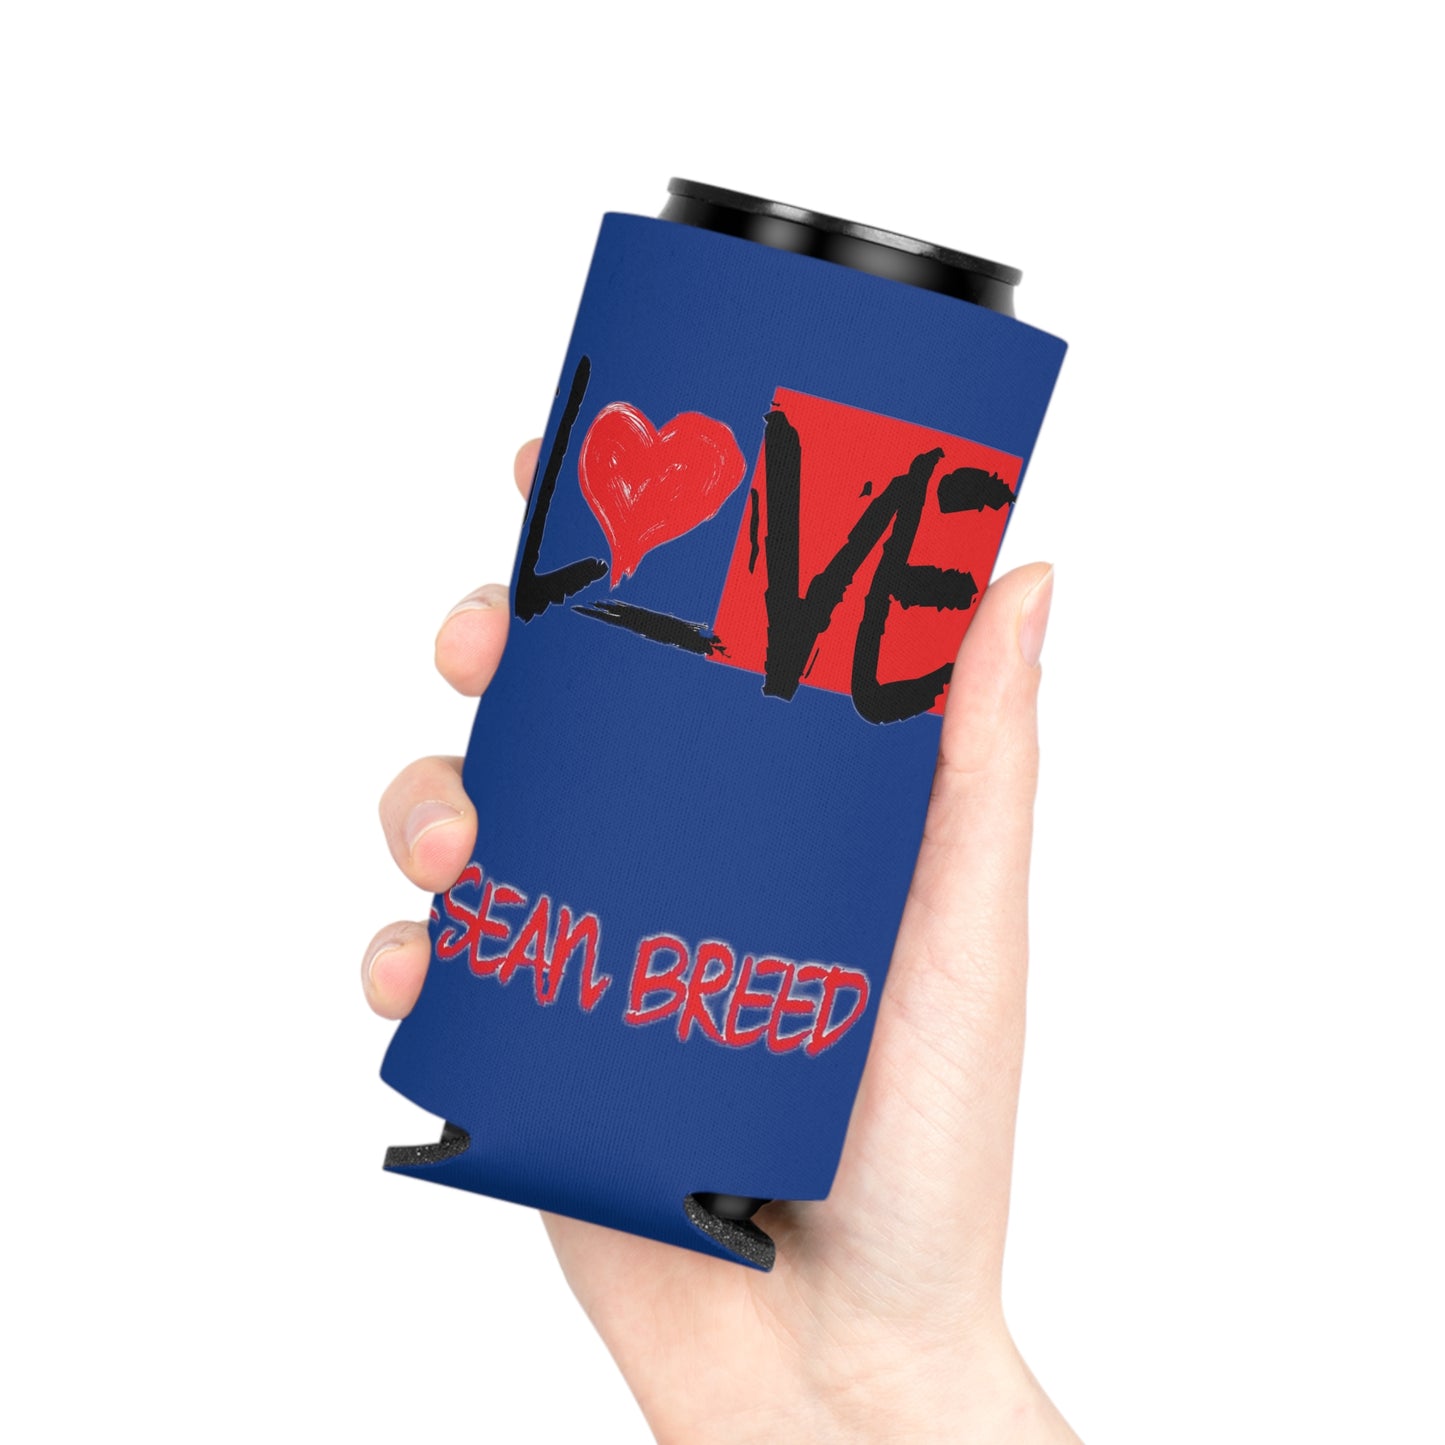 Sean Breed L❤️VE Can Cooler